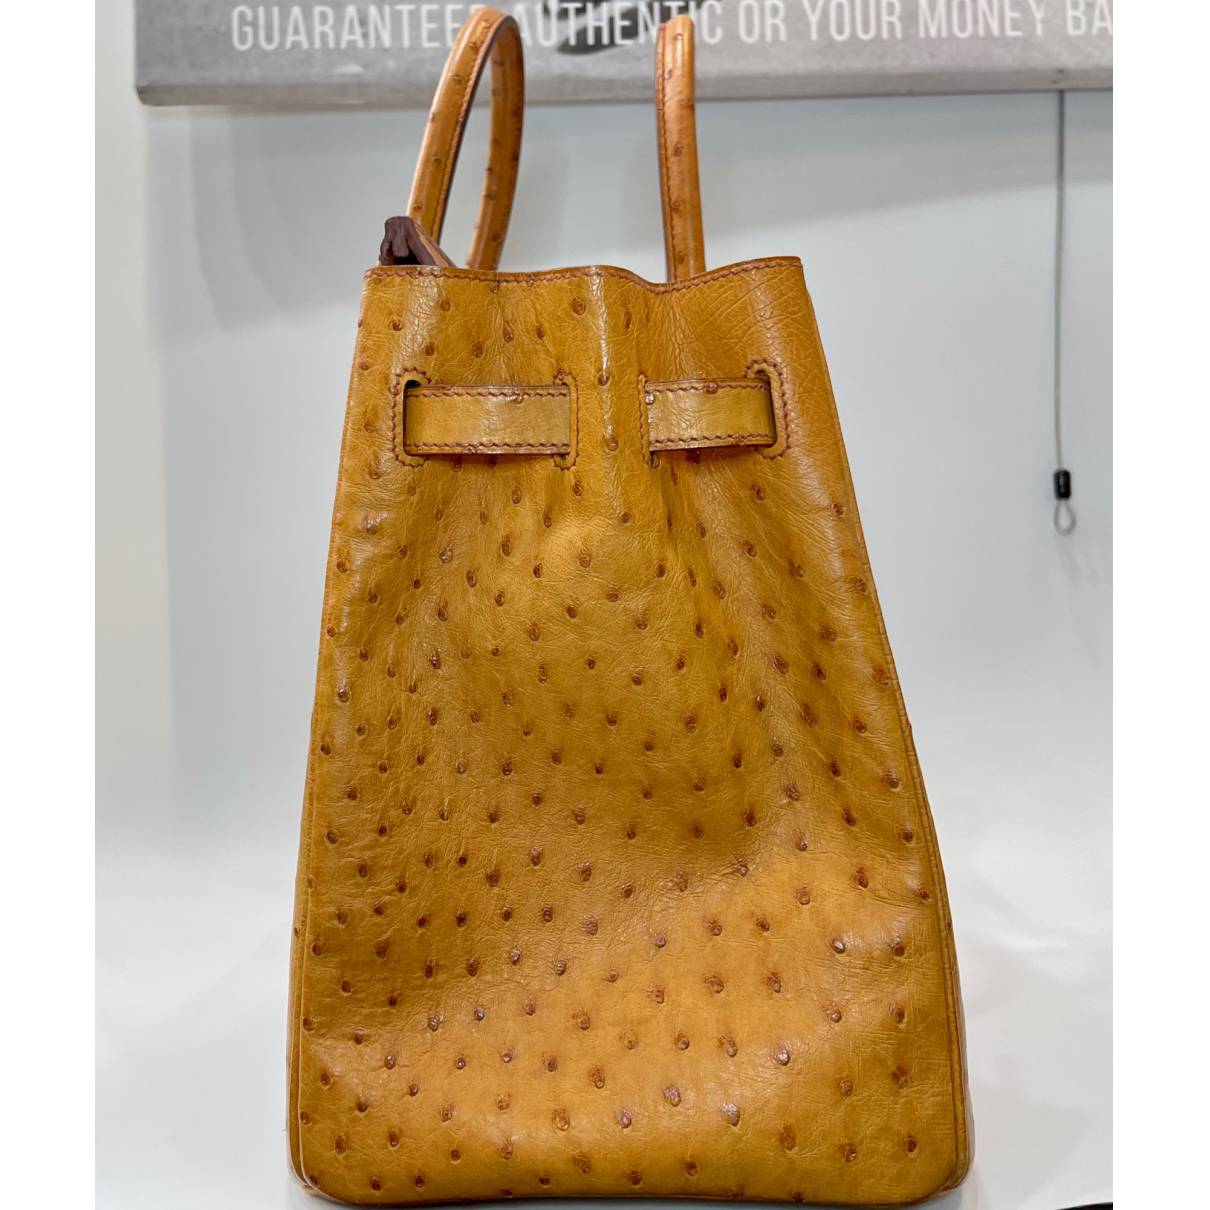 Hermès Birkin Handbag 398346